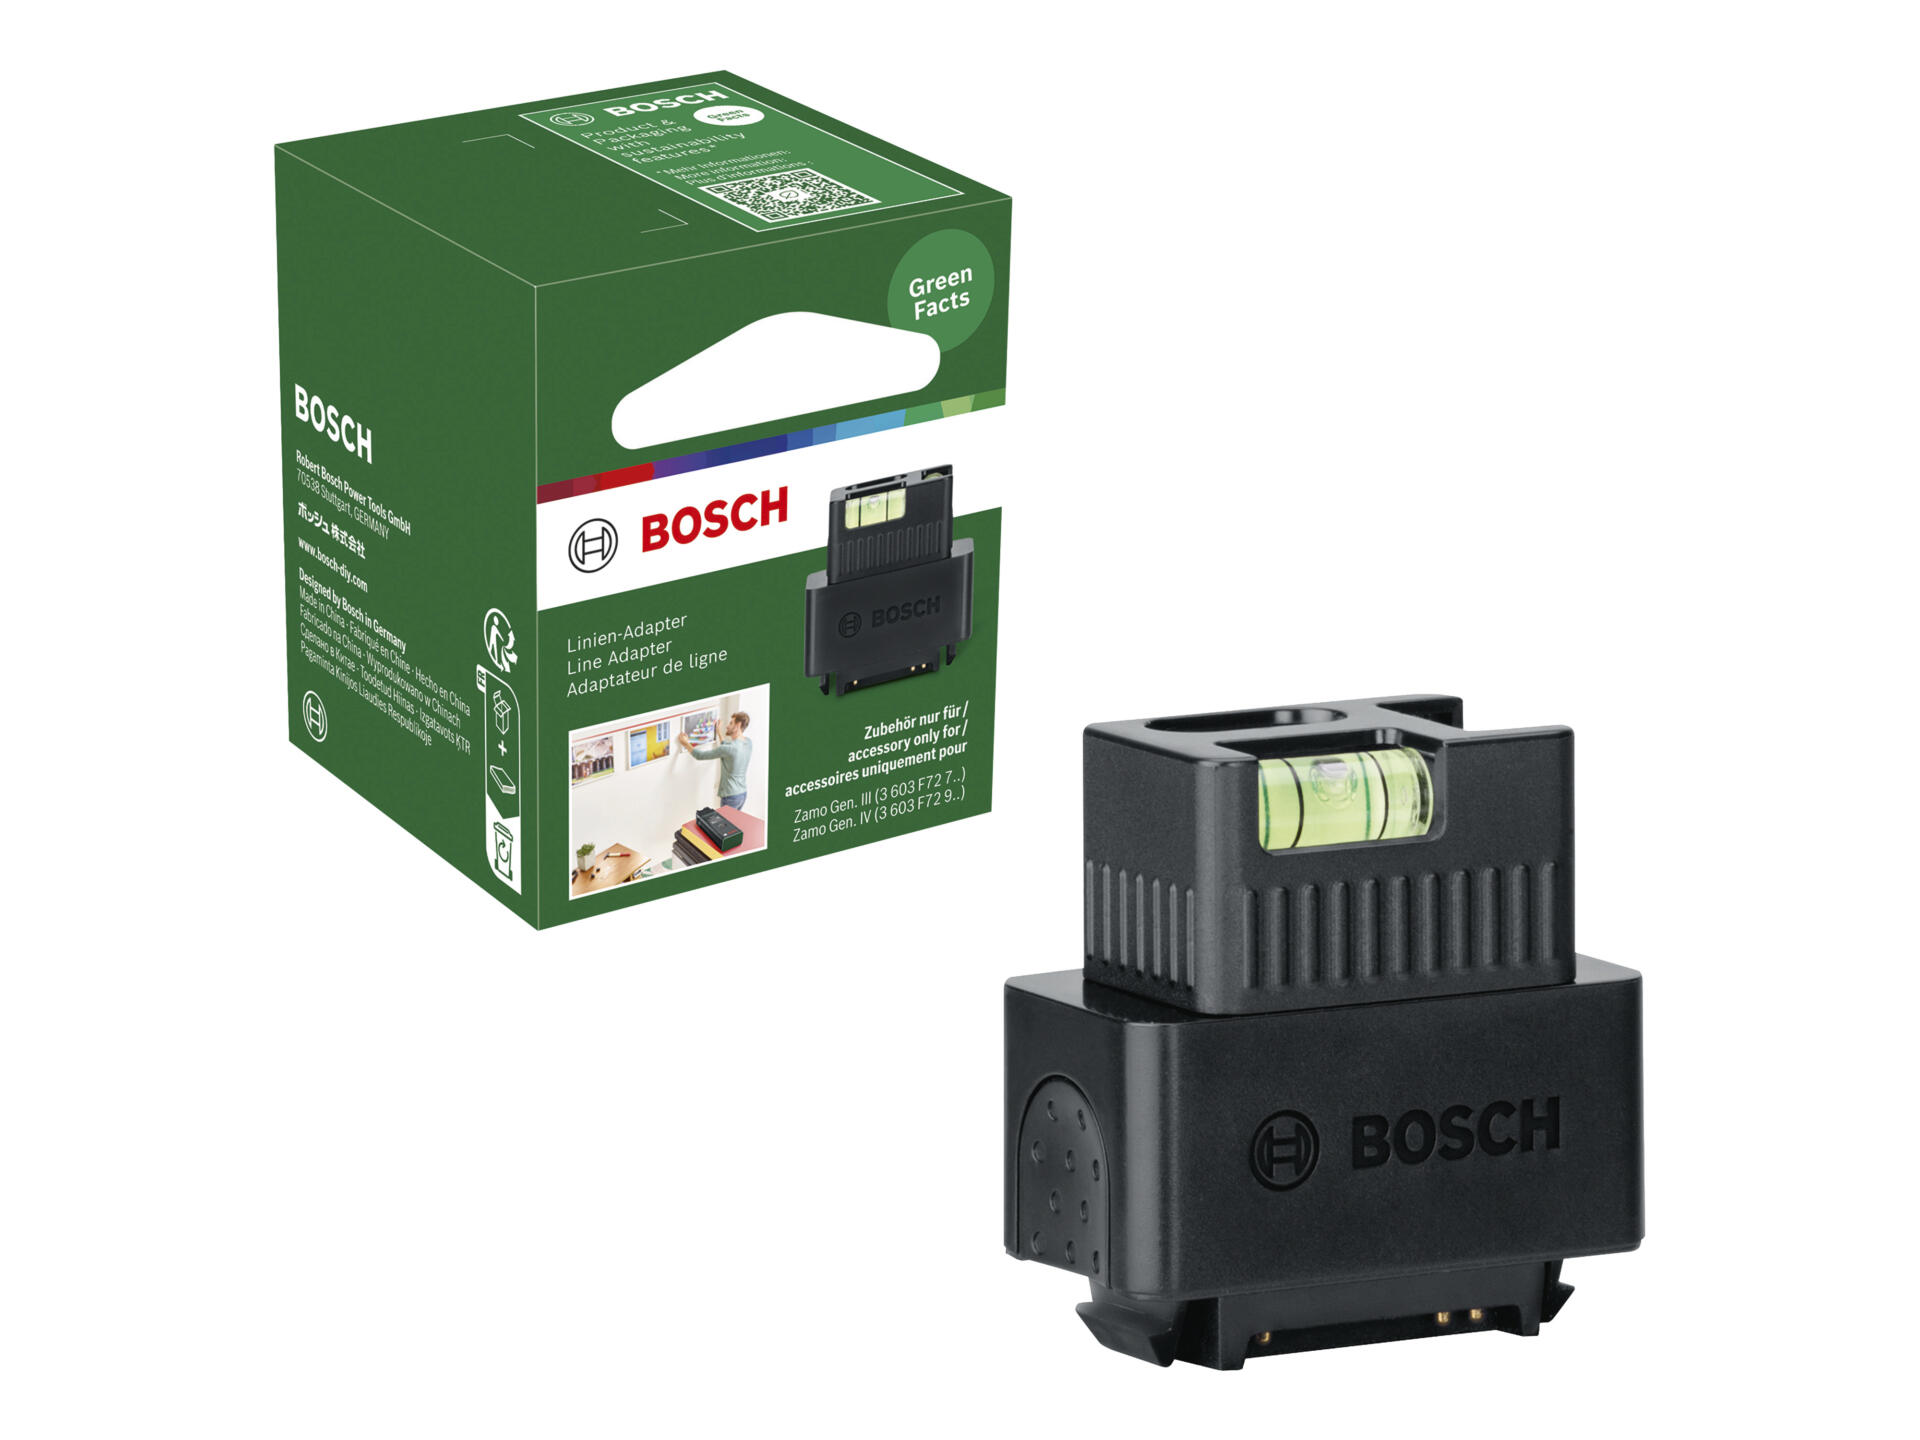 Bosch adapteur de ligne Zamo télémètre laser